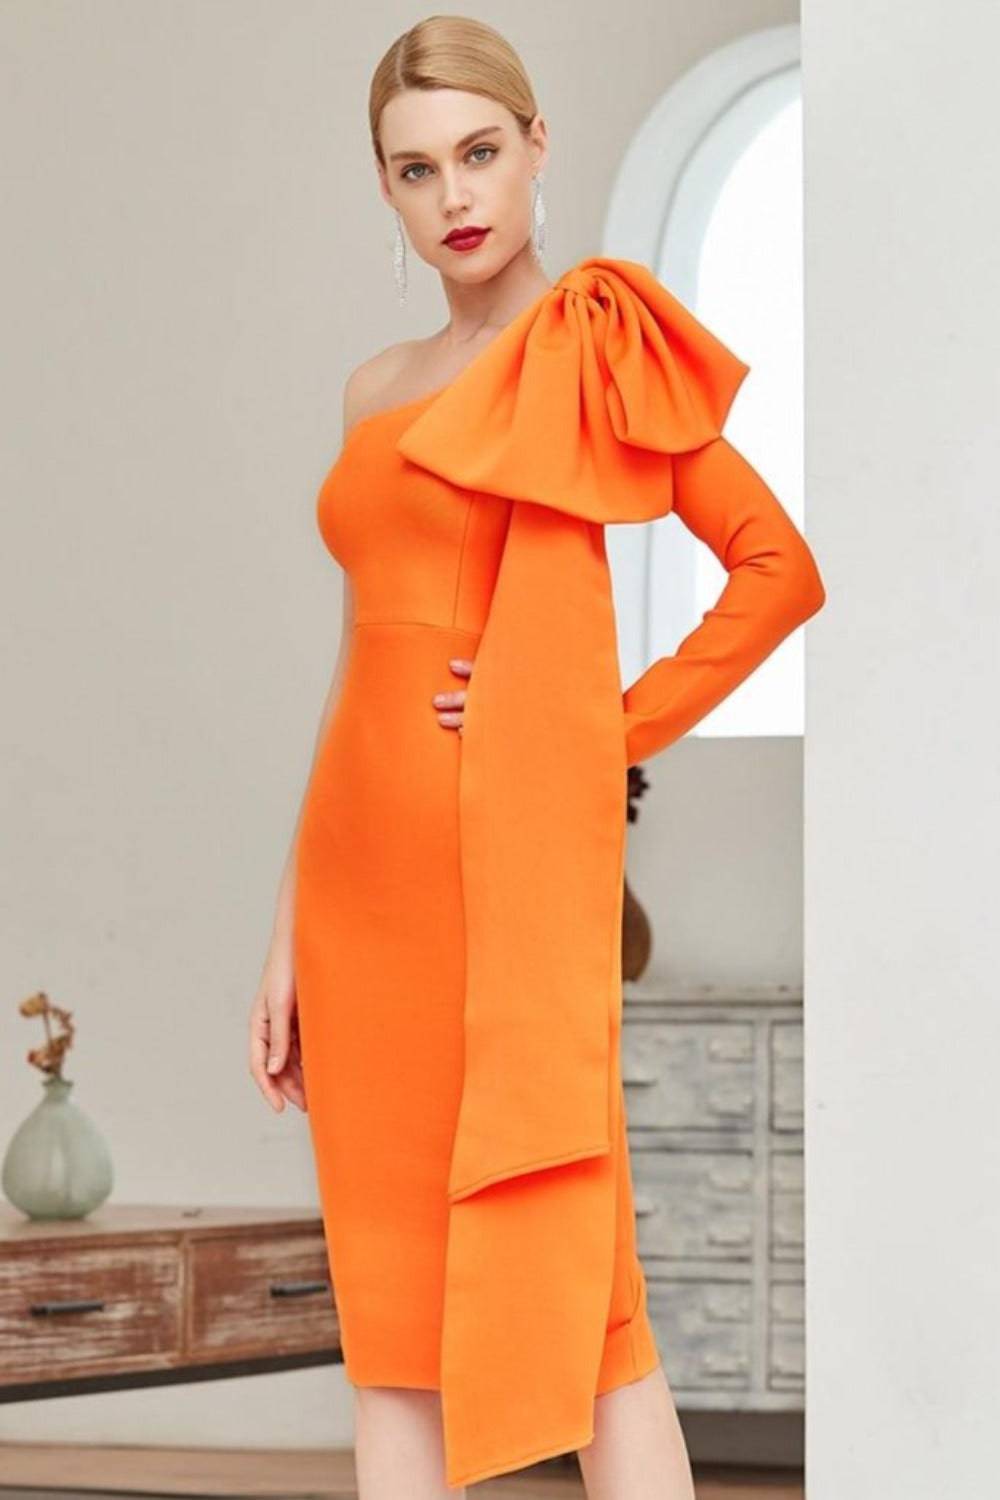 Ruffle Bow Long Sleeve off the Shoulder Bodycon Orange Midi Cocktail Dress - TGC Boutique - Bodycon Dress